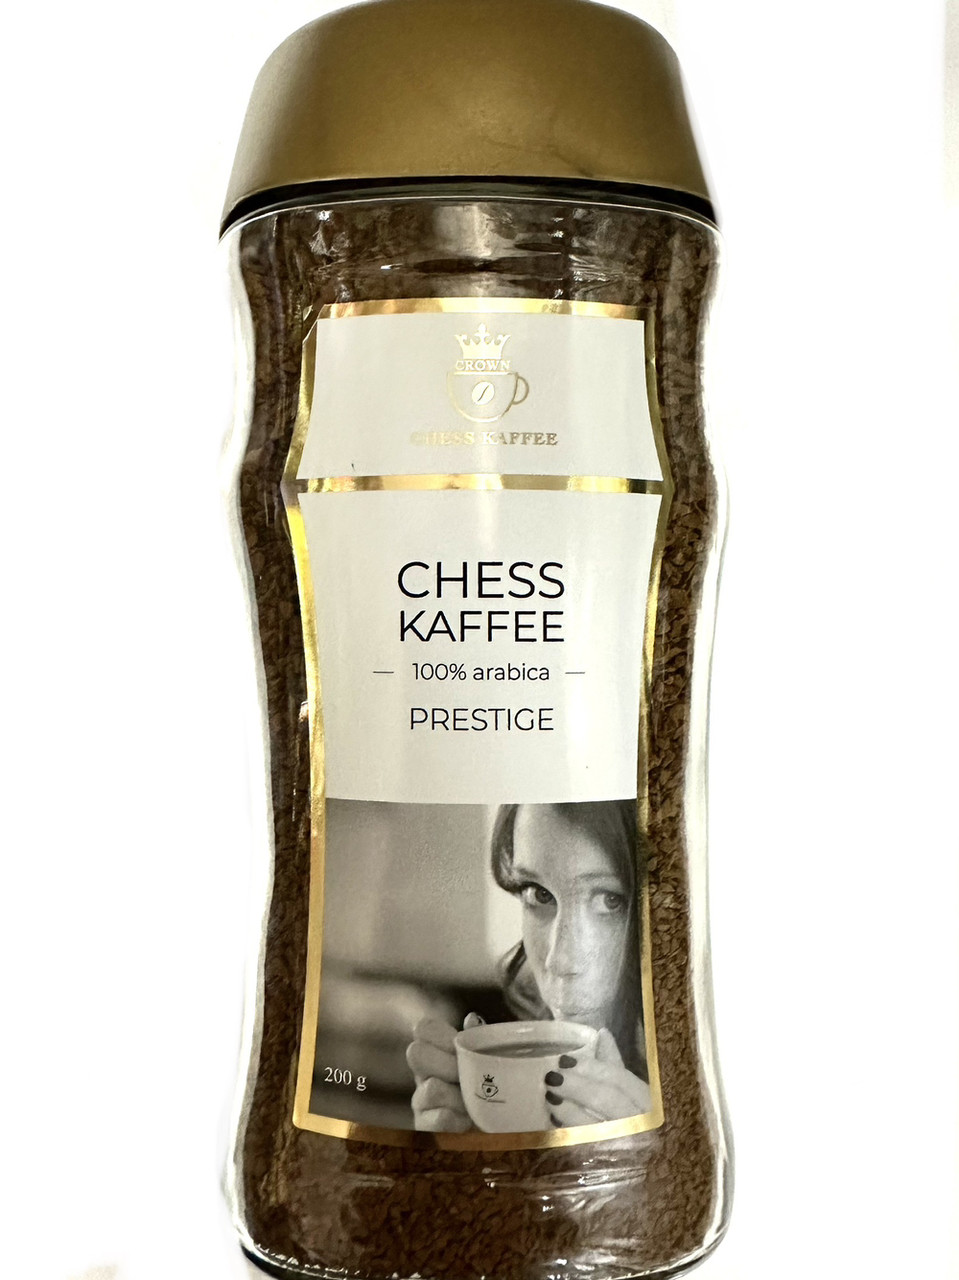 CHESS KAFFEE Prestige 100% арабіка розчинна кава 200 г Німеччина